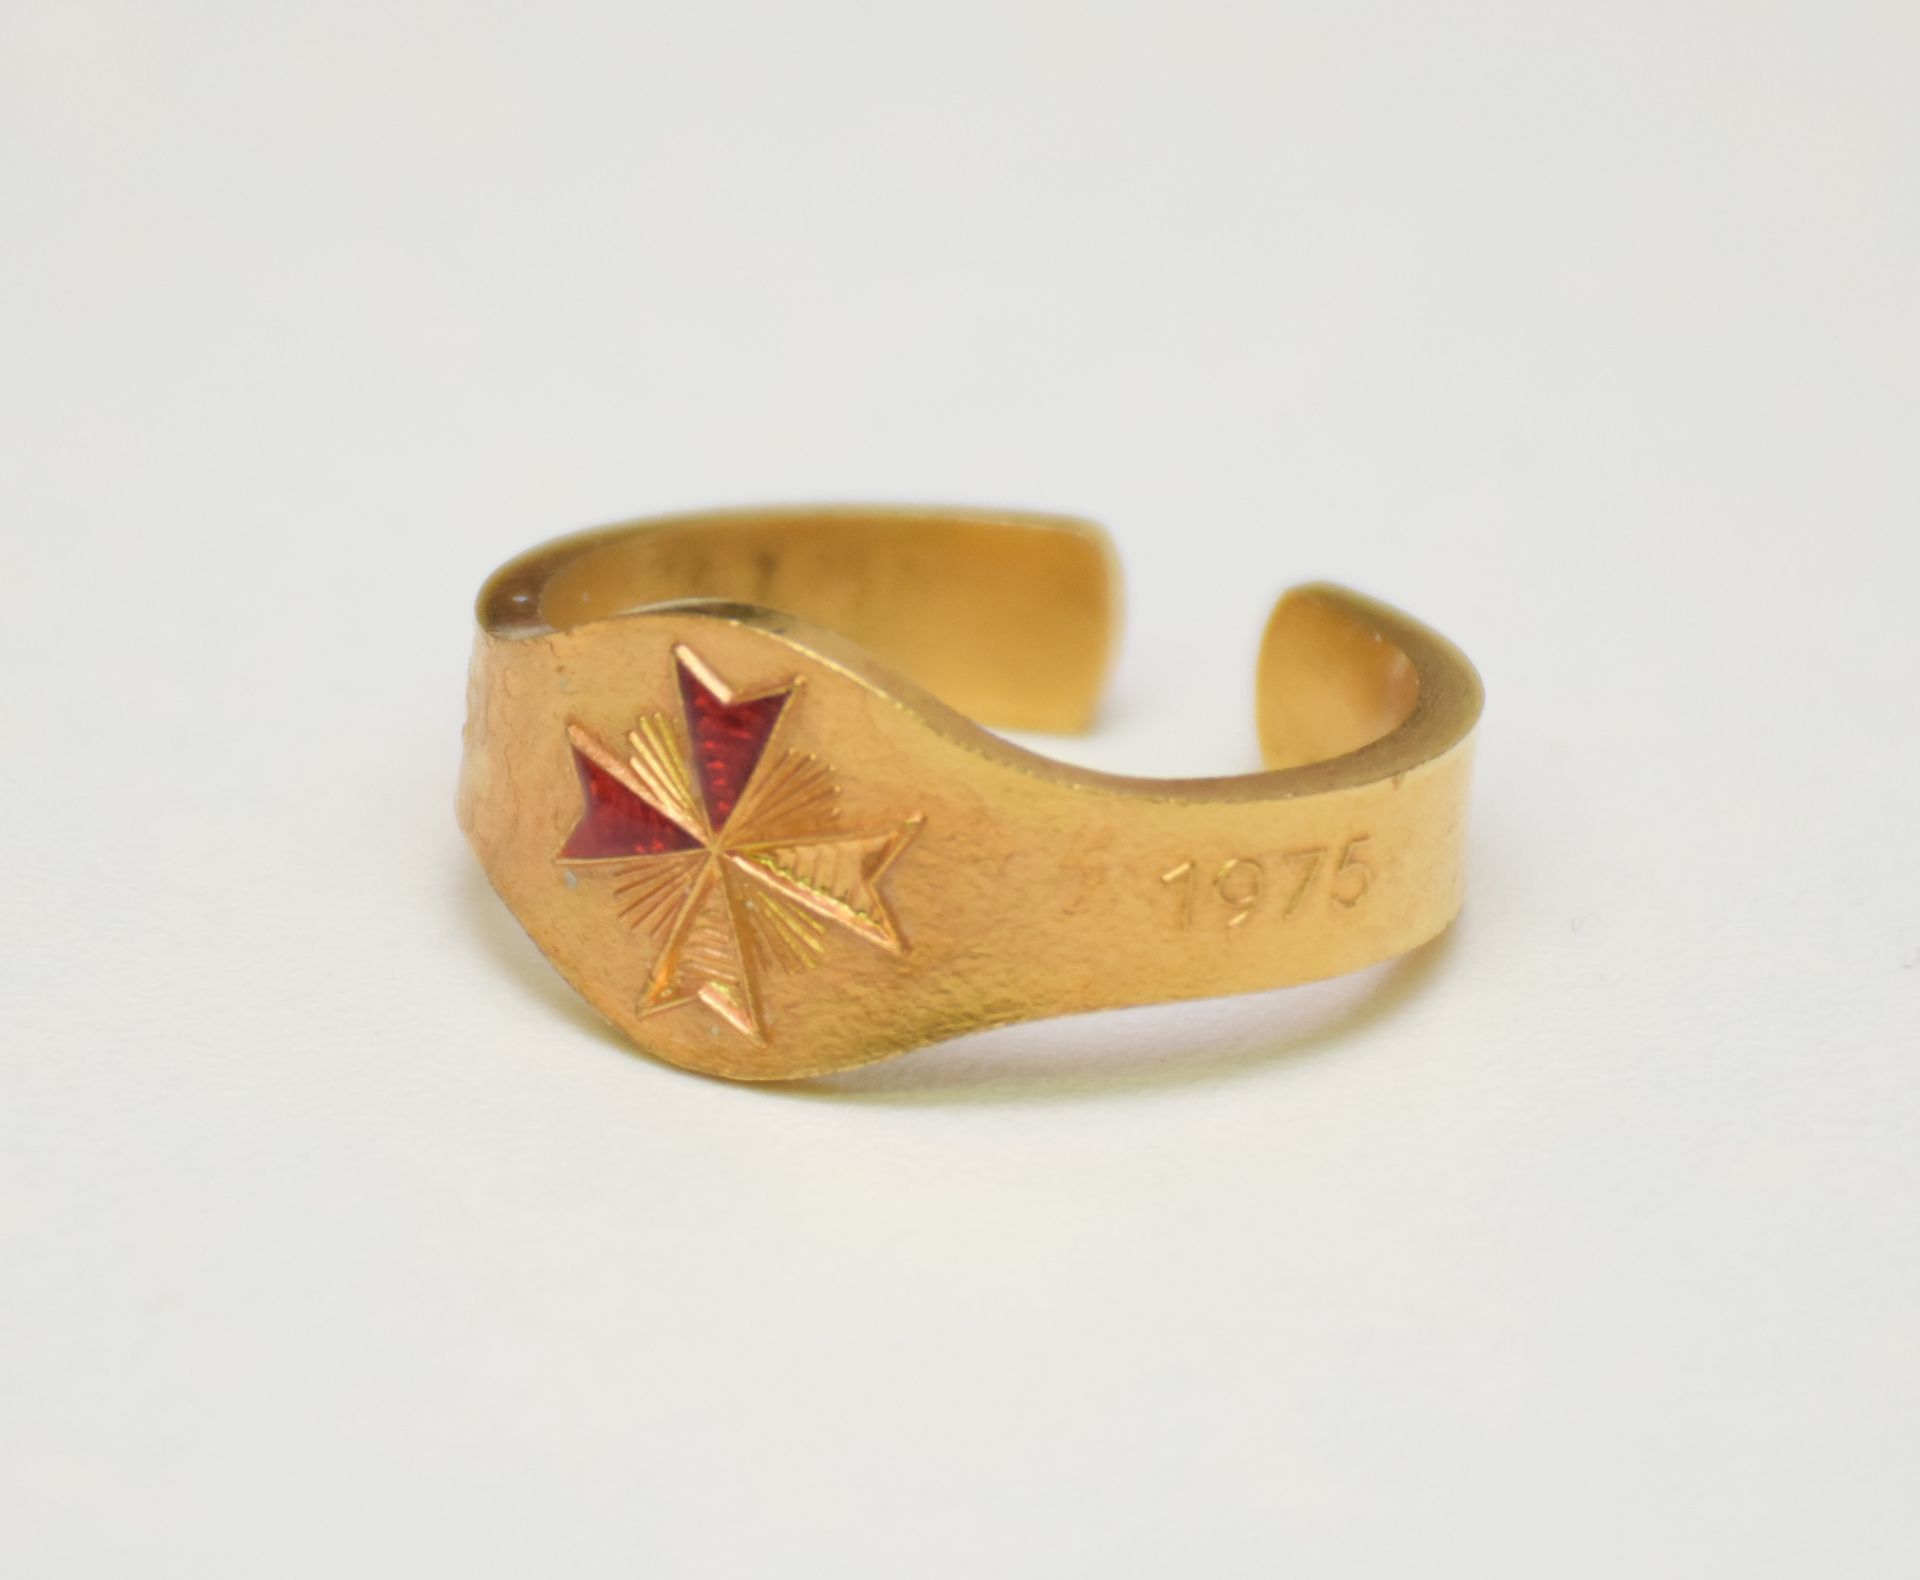 Null 纪念戒指

纪念近卫哥萨克团成立200周年的纪念戒指。刻有1775年和1975年的日期。

鎏金金属，红色珐琅。D : 2厘米

A.B.E.(珐琅质&hellip;